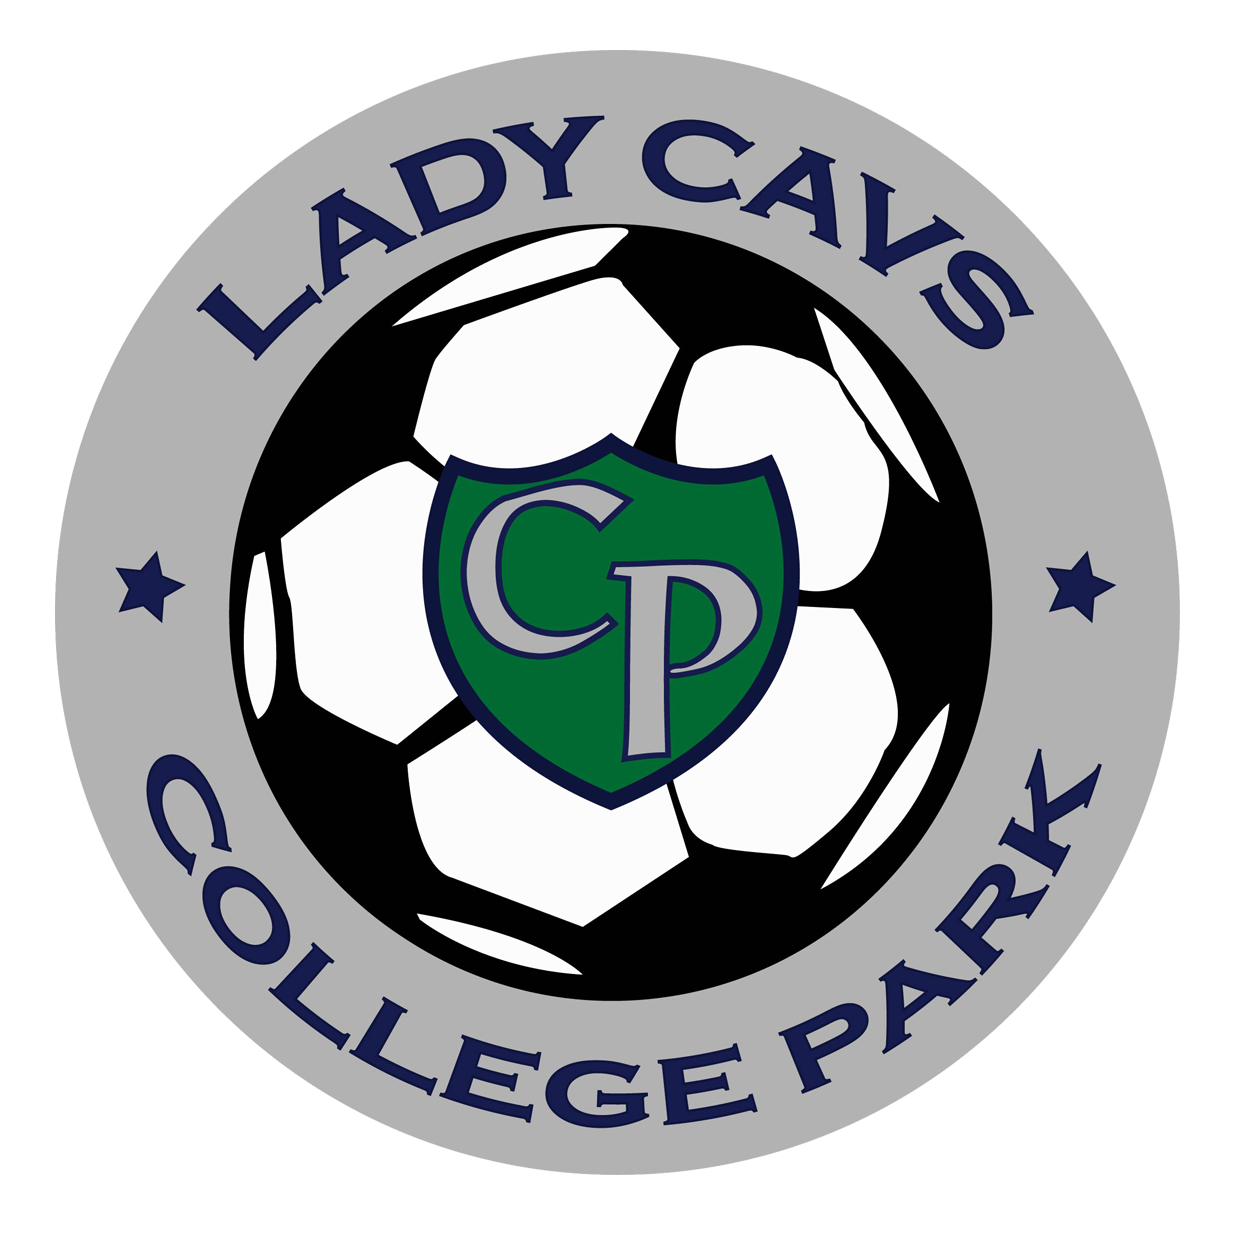 Lady Cavs logo